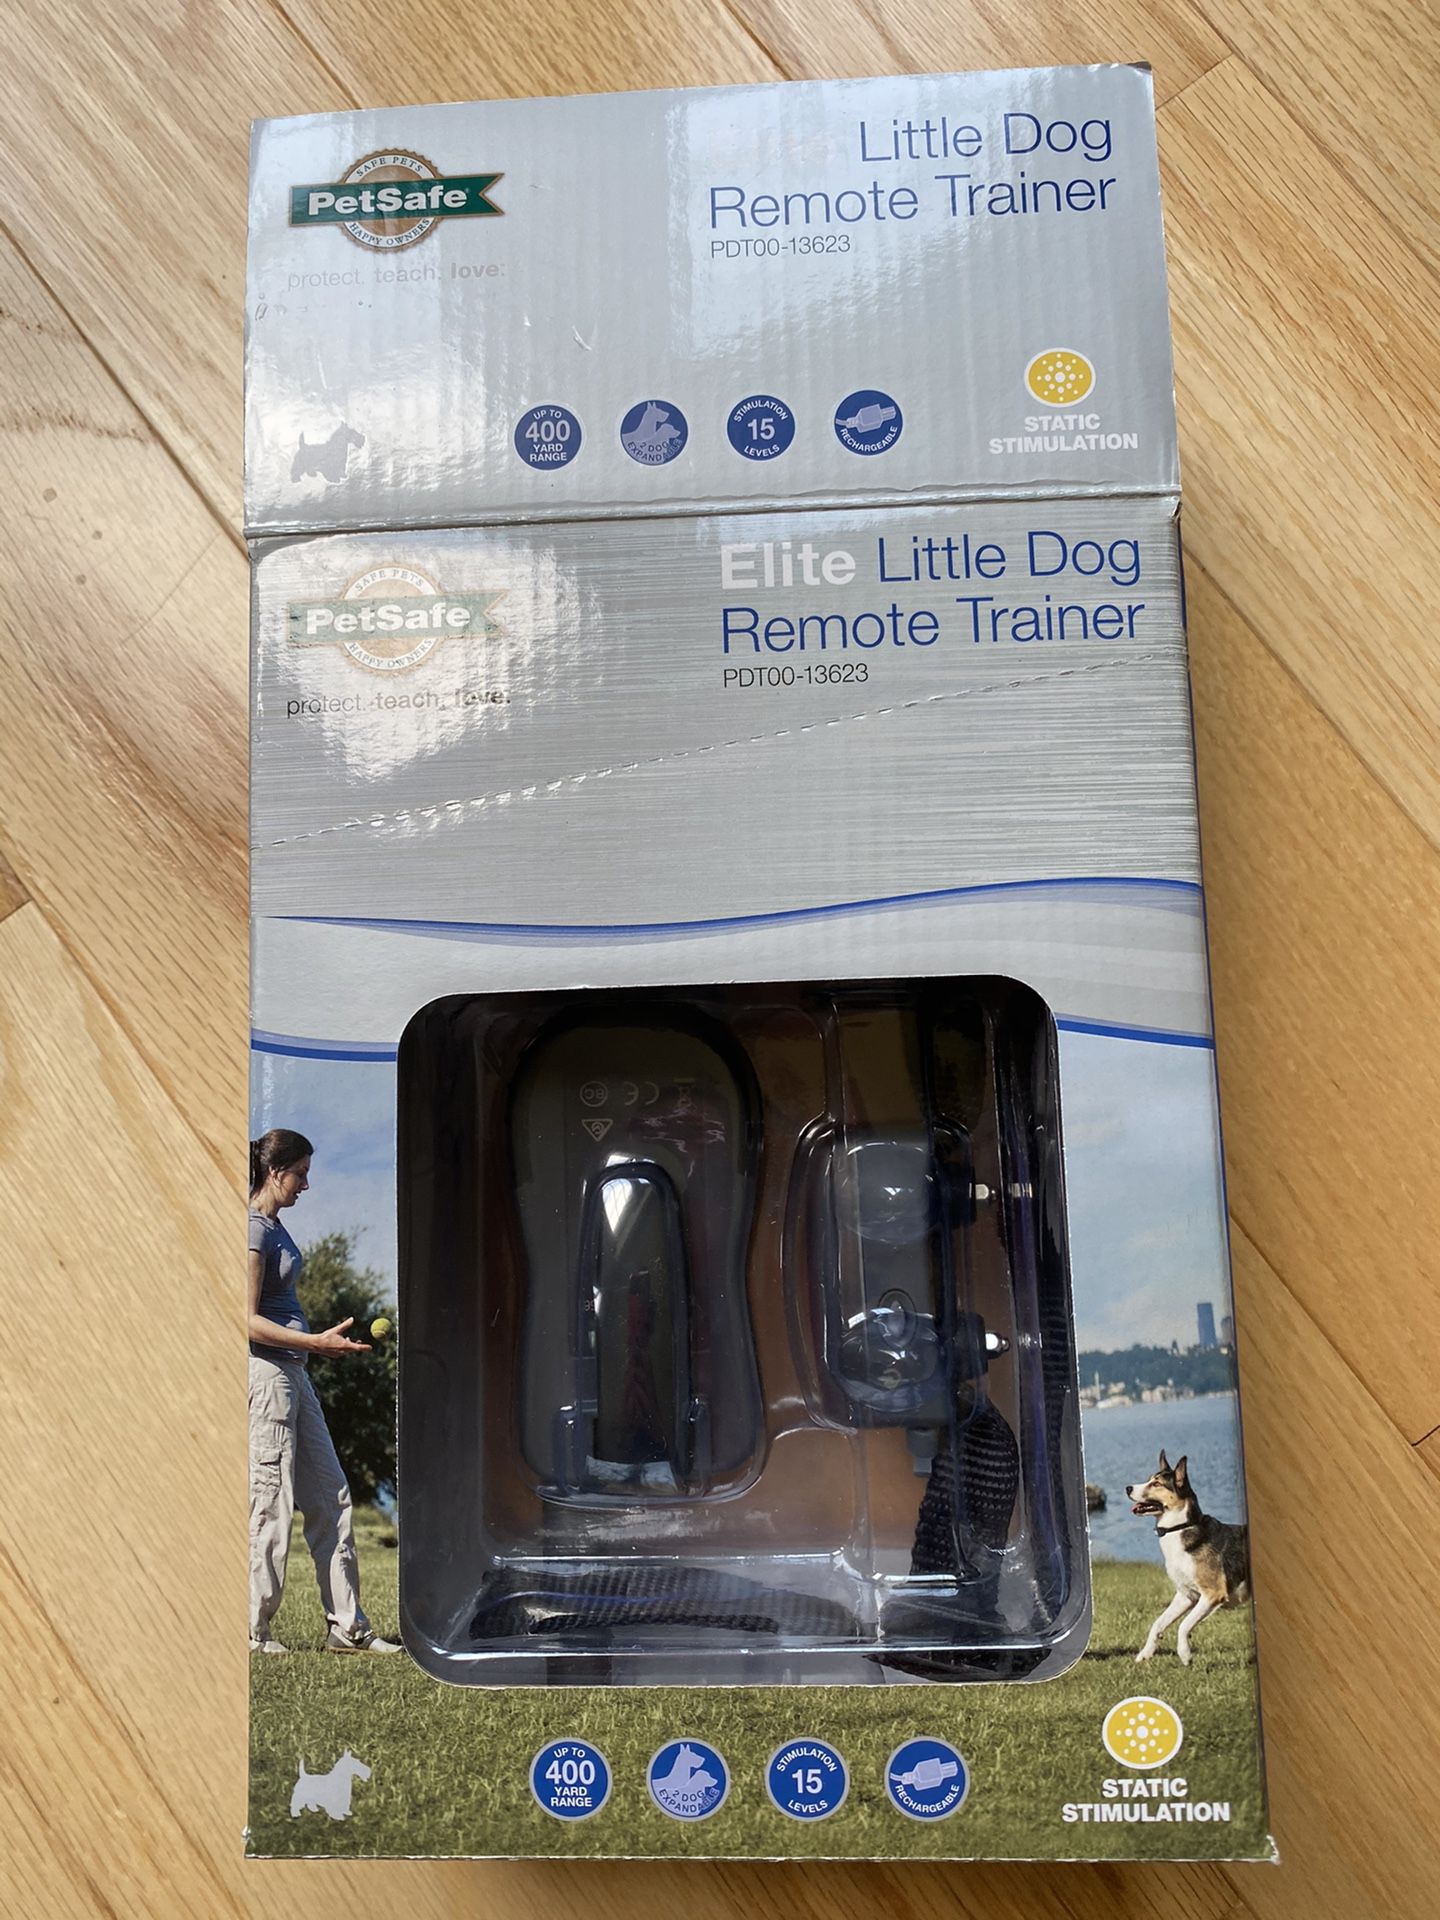 Remote dog trainer - new